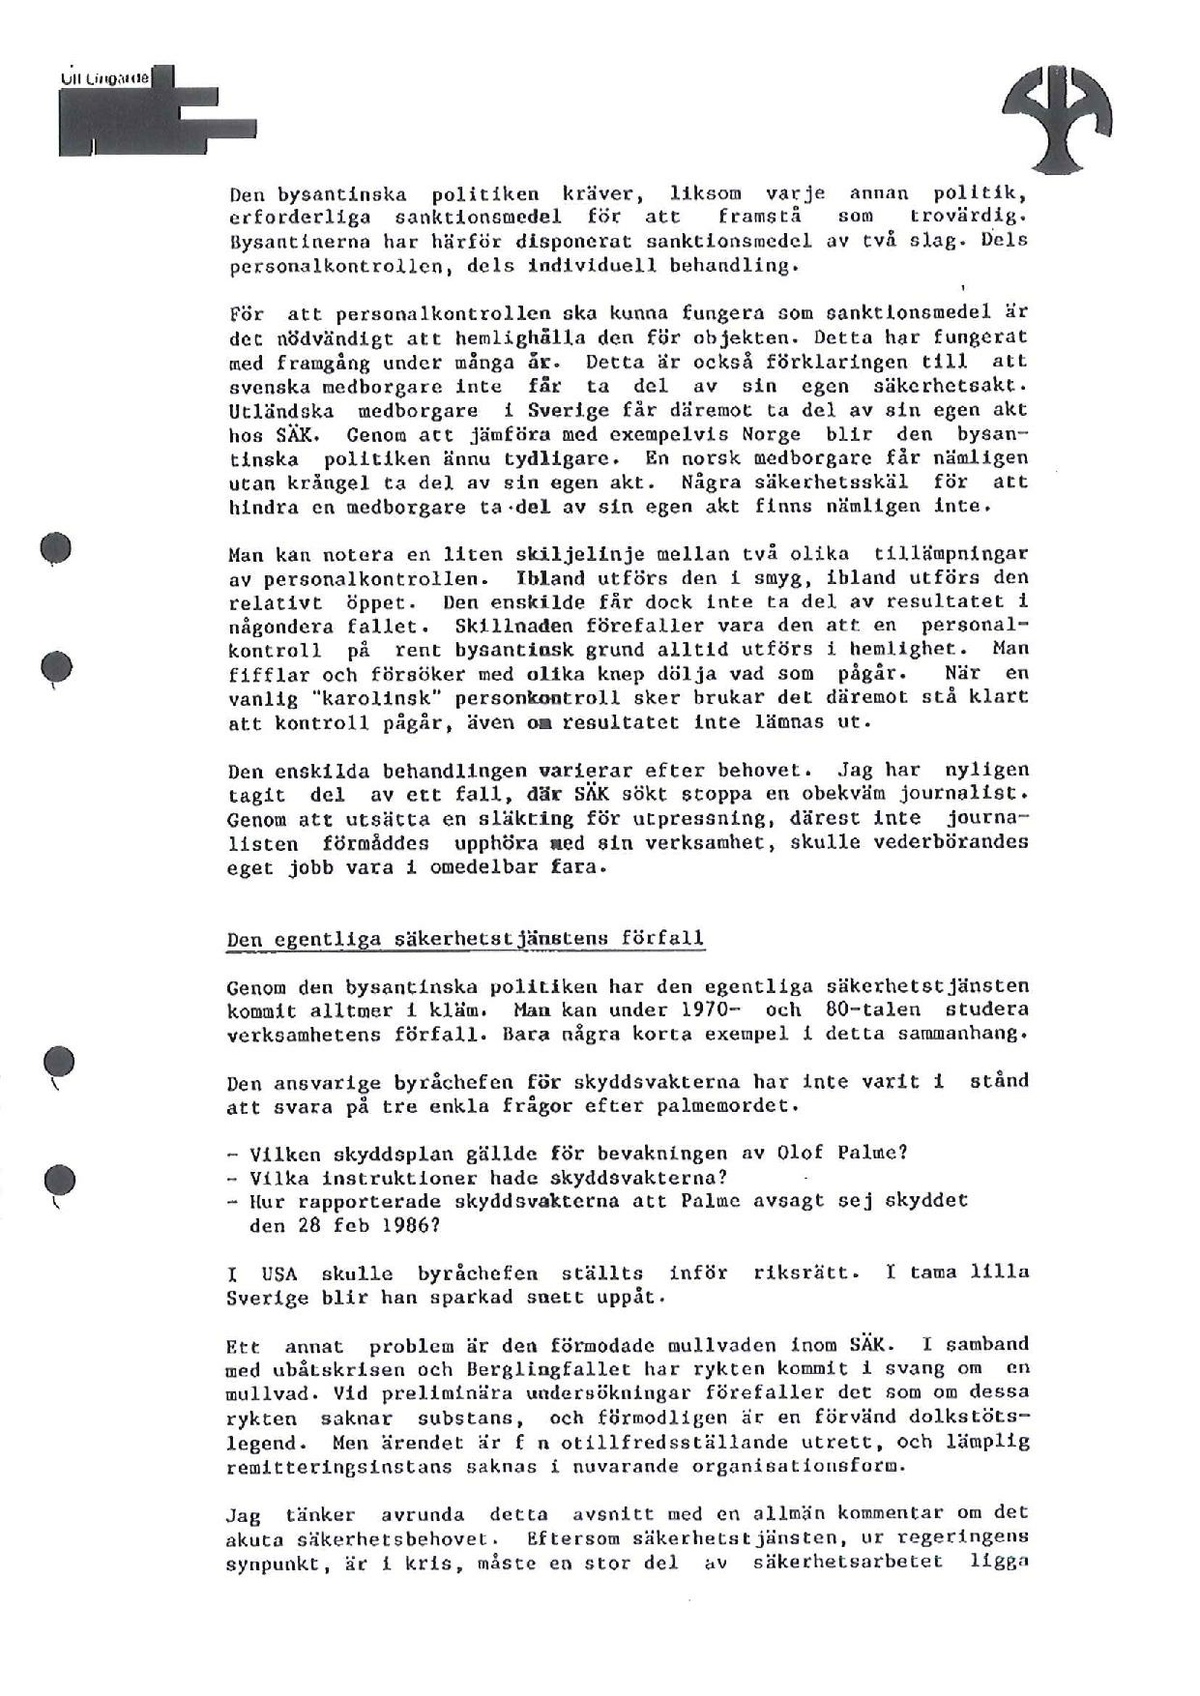 Pol-1987-02-23 D6750-00 Ulf-Ling rde.pdf